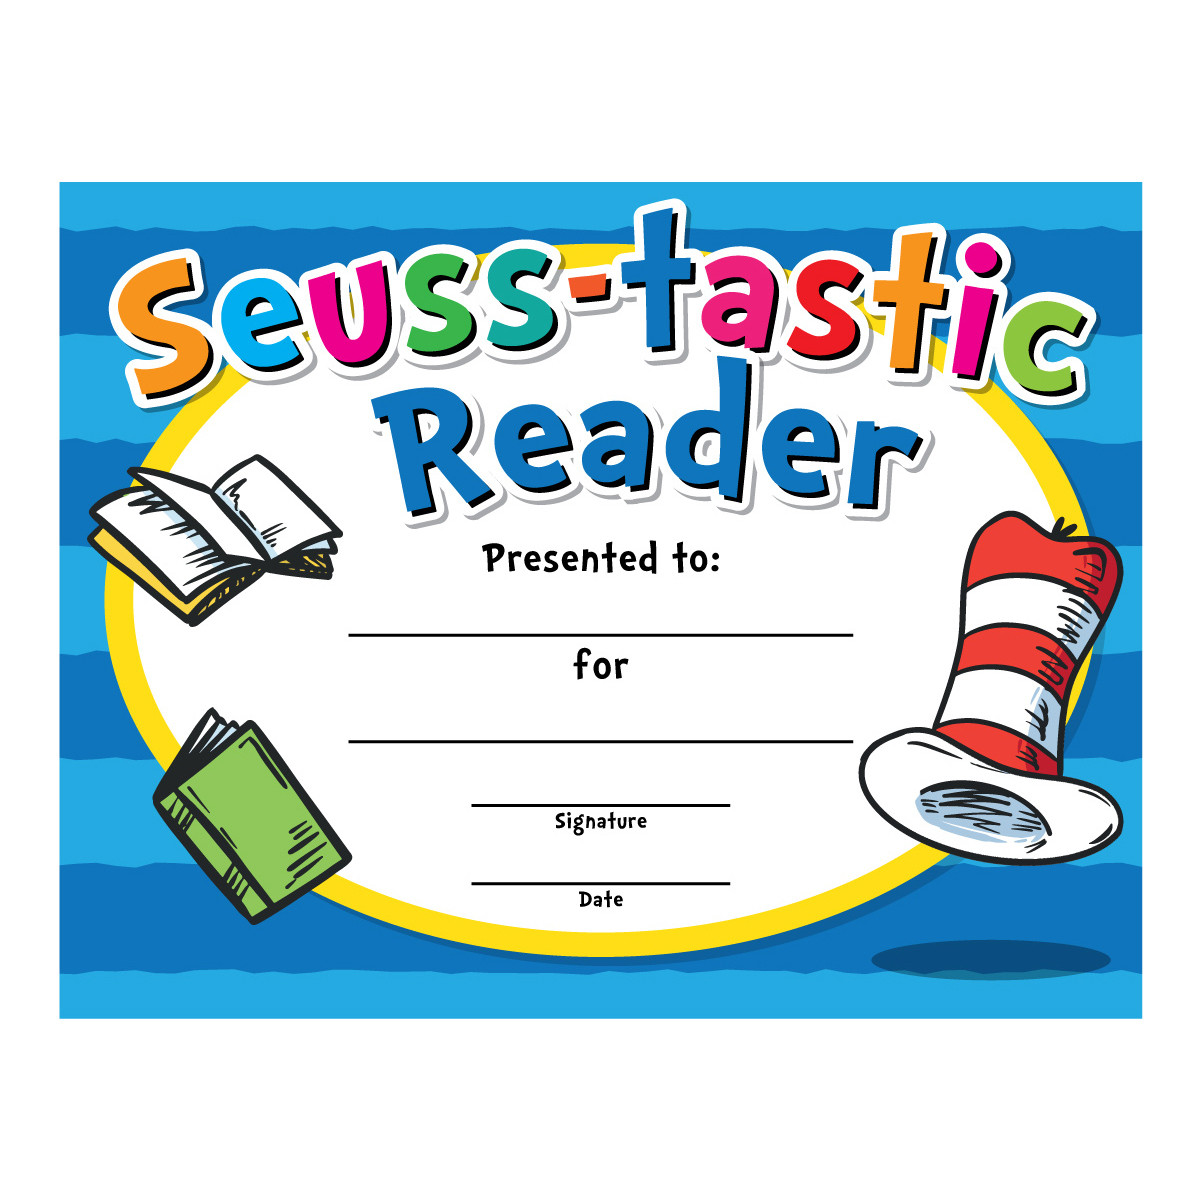 Custom 8.5" x 11" Certificate - Seuss-tastic Reader